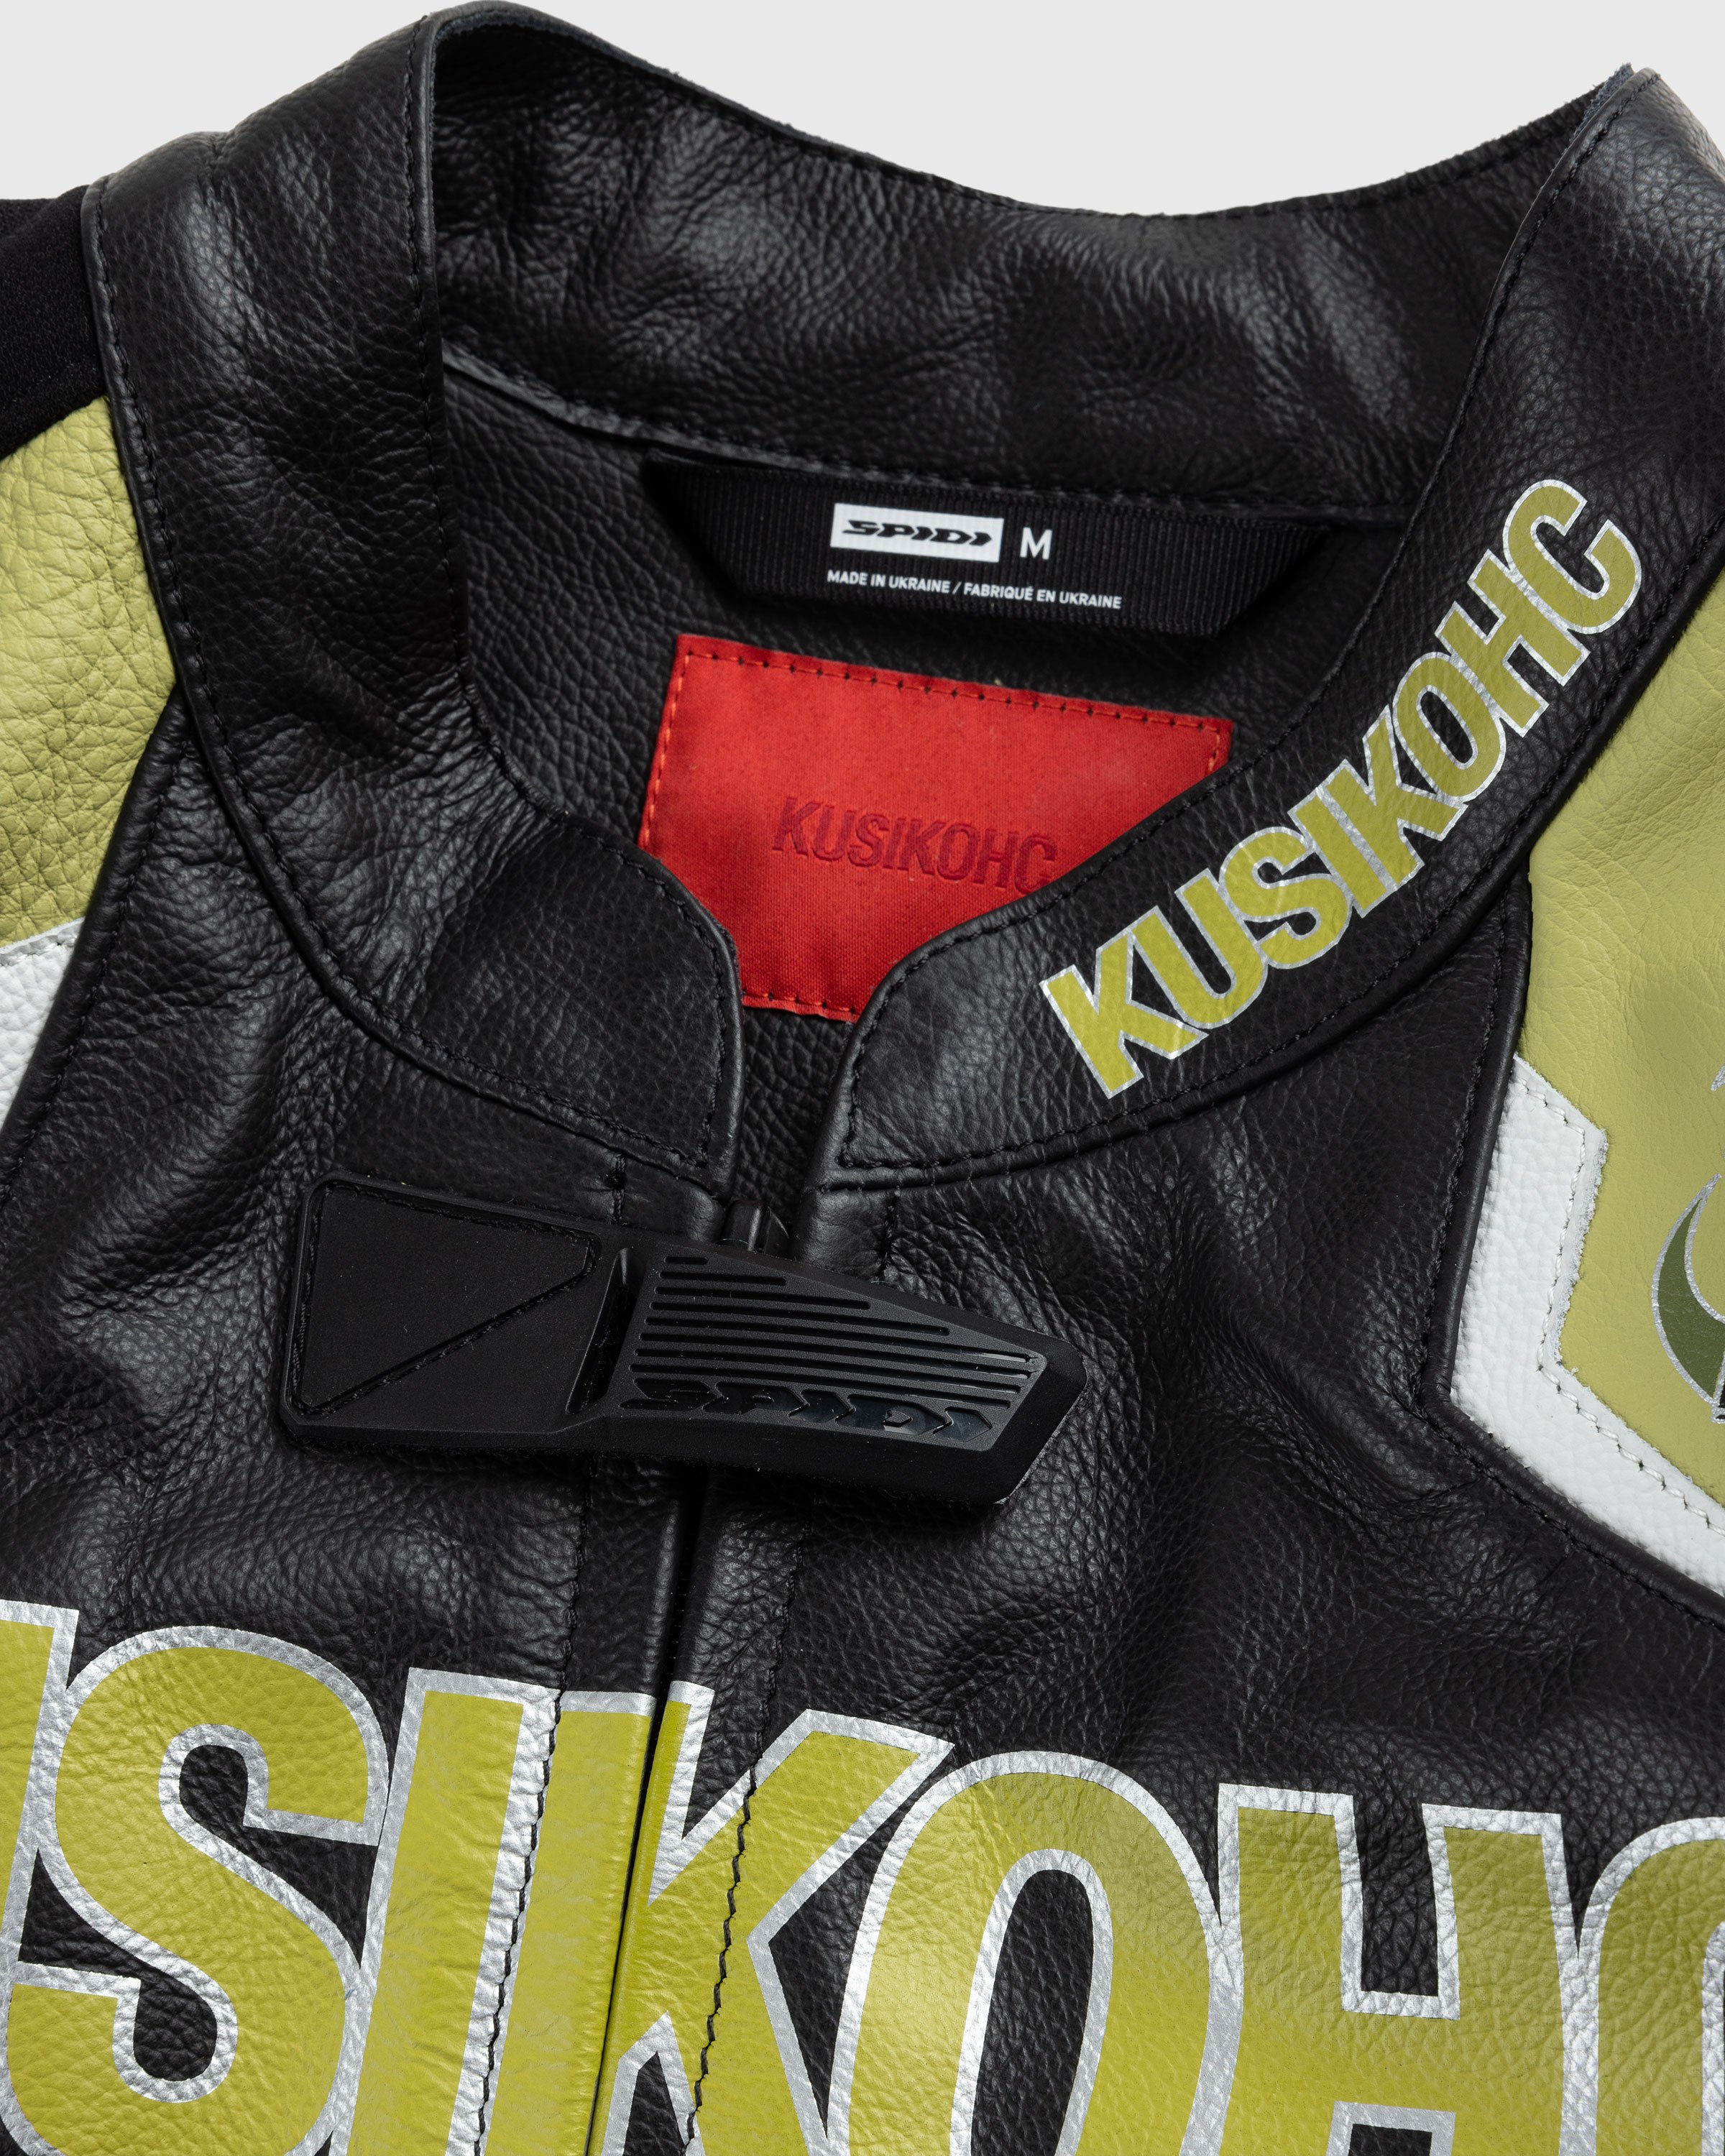 KUSIKOHC - Spidi Rider Jacket Black/Dark Green - Clothing - Multi - Image 6